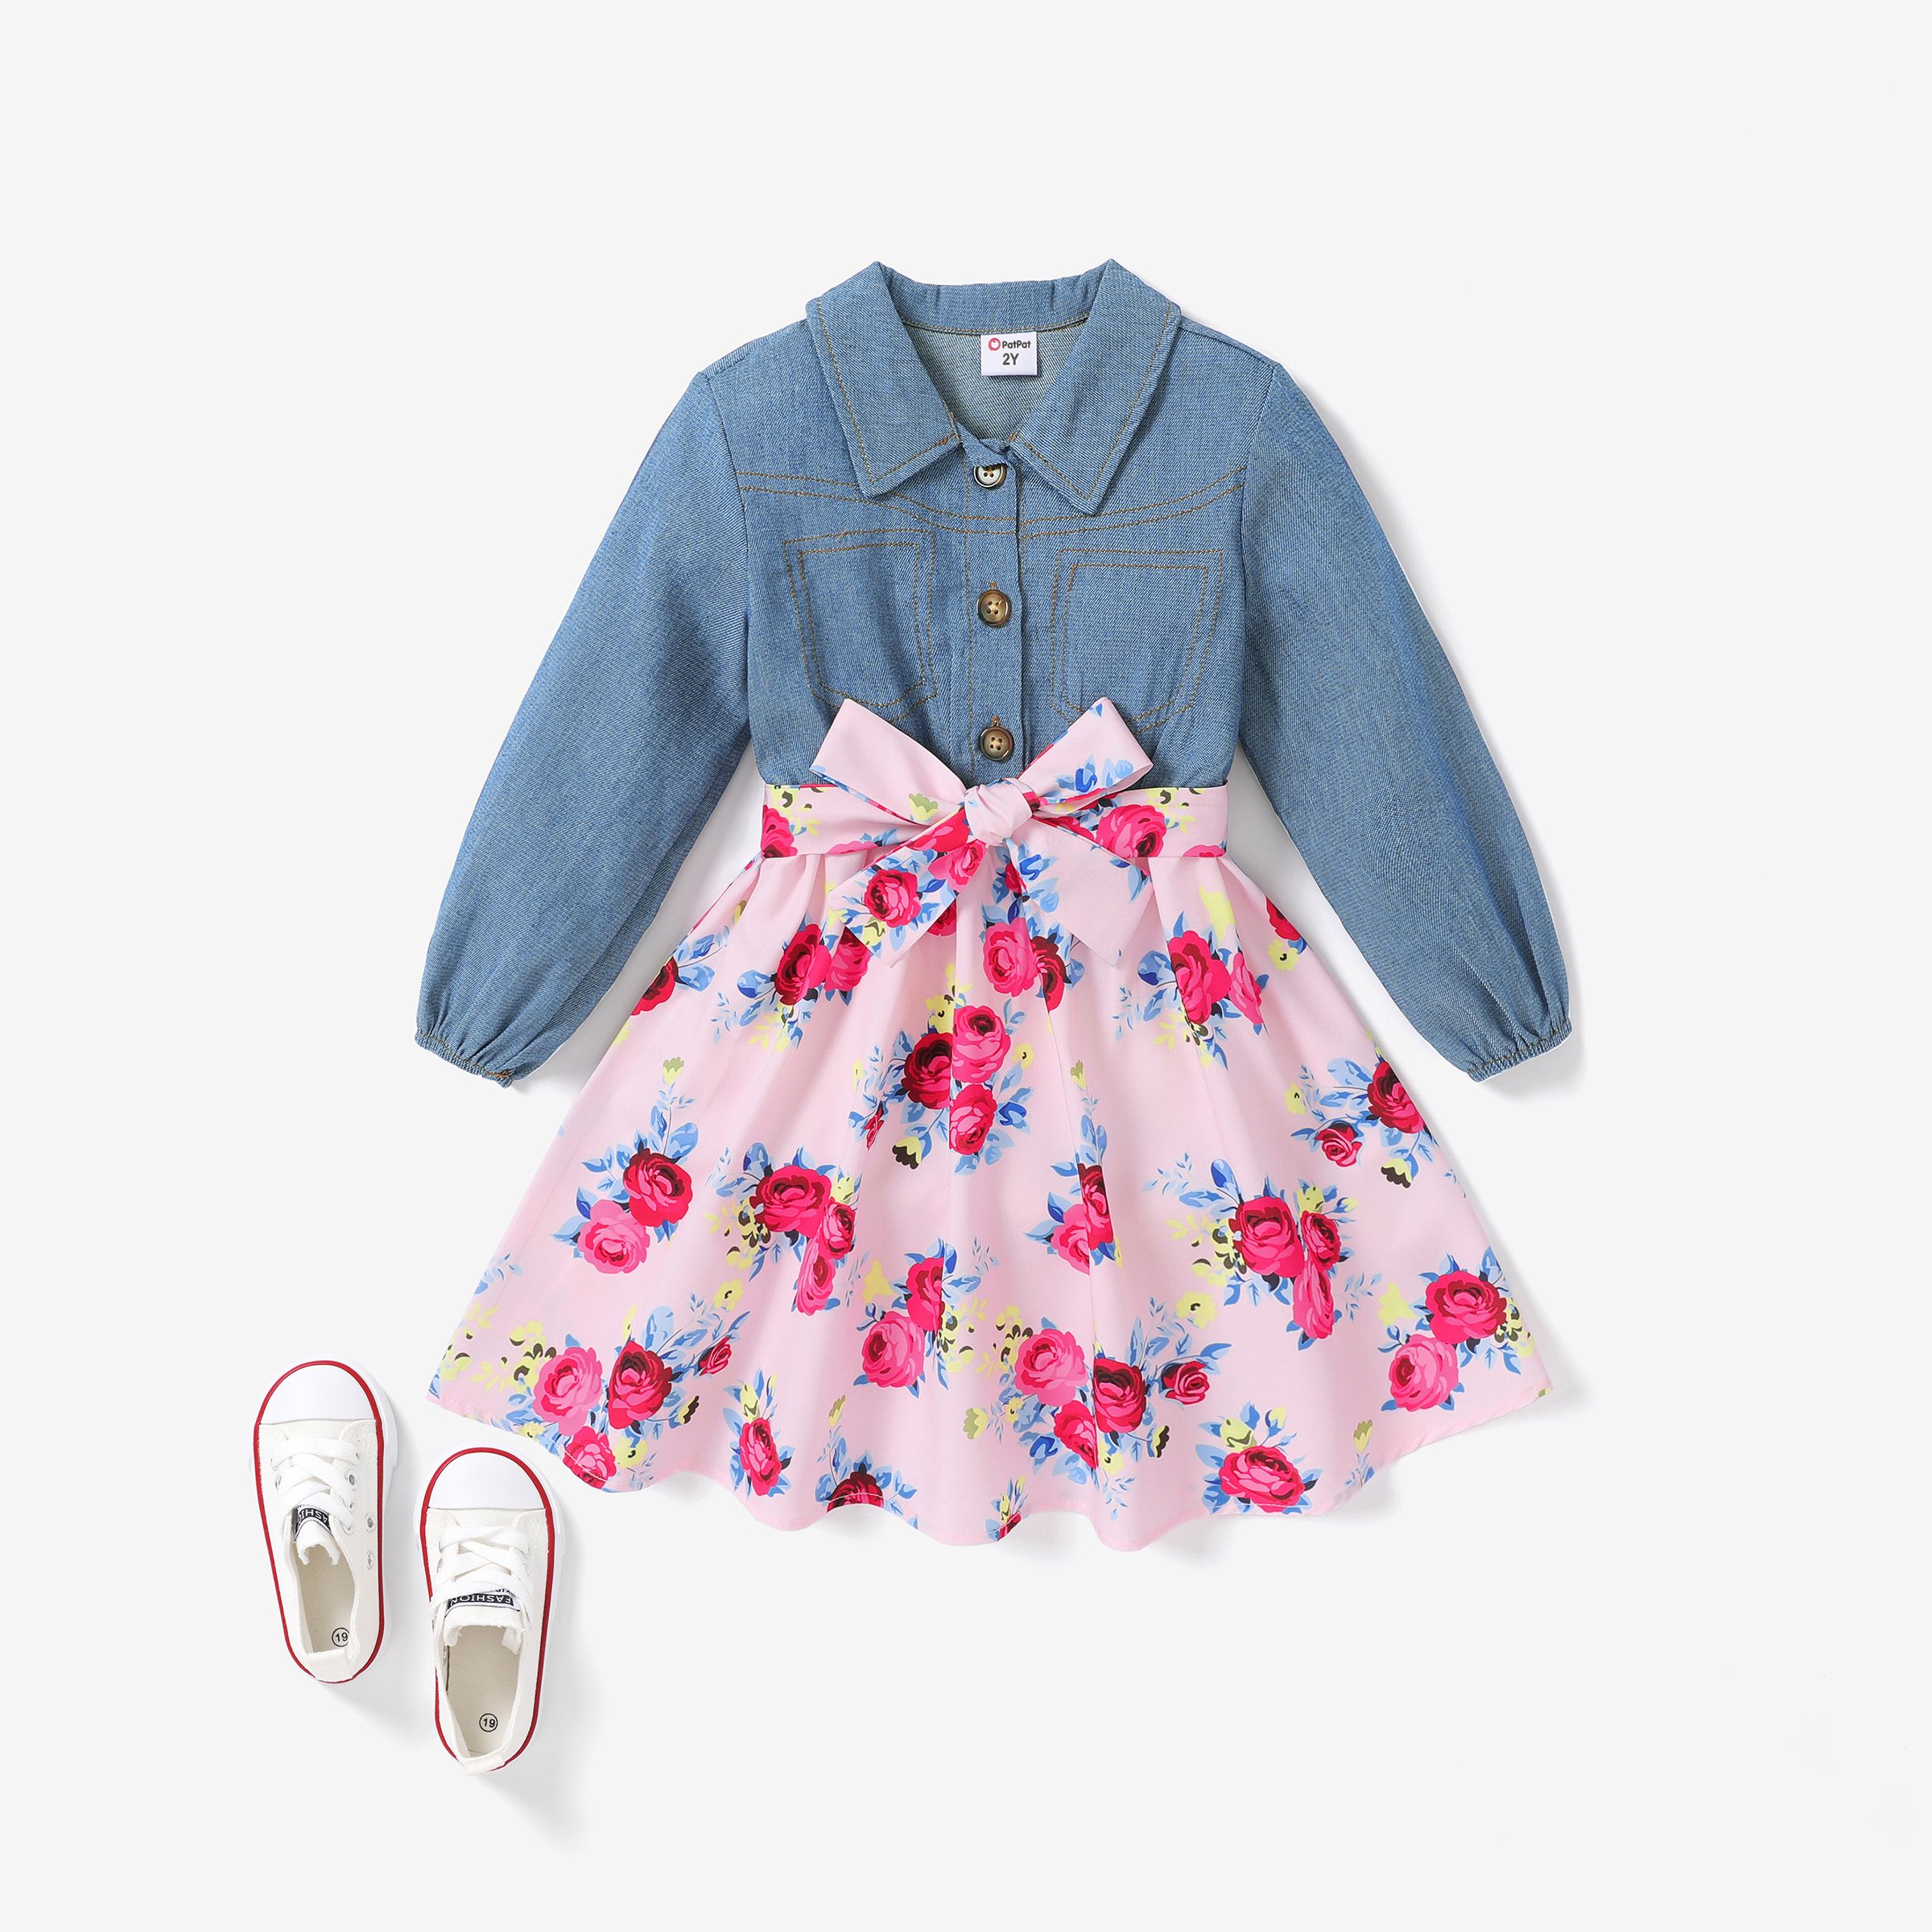 Toddler Girls Sweet Floral Dress Lapel Design Denim Top Dress